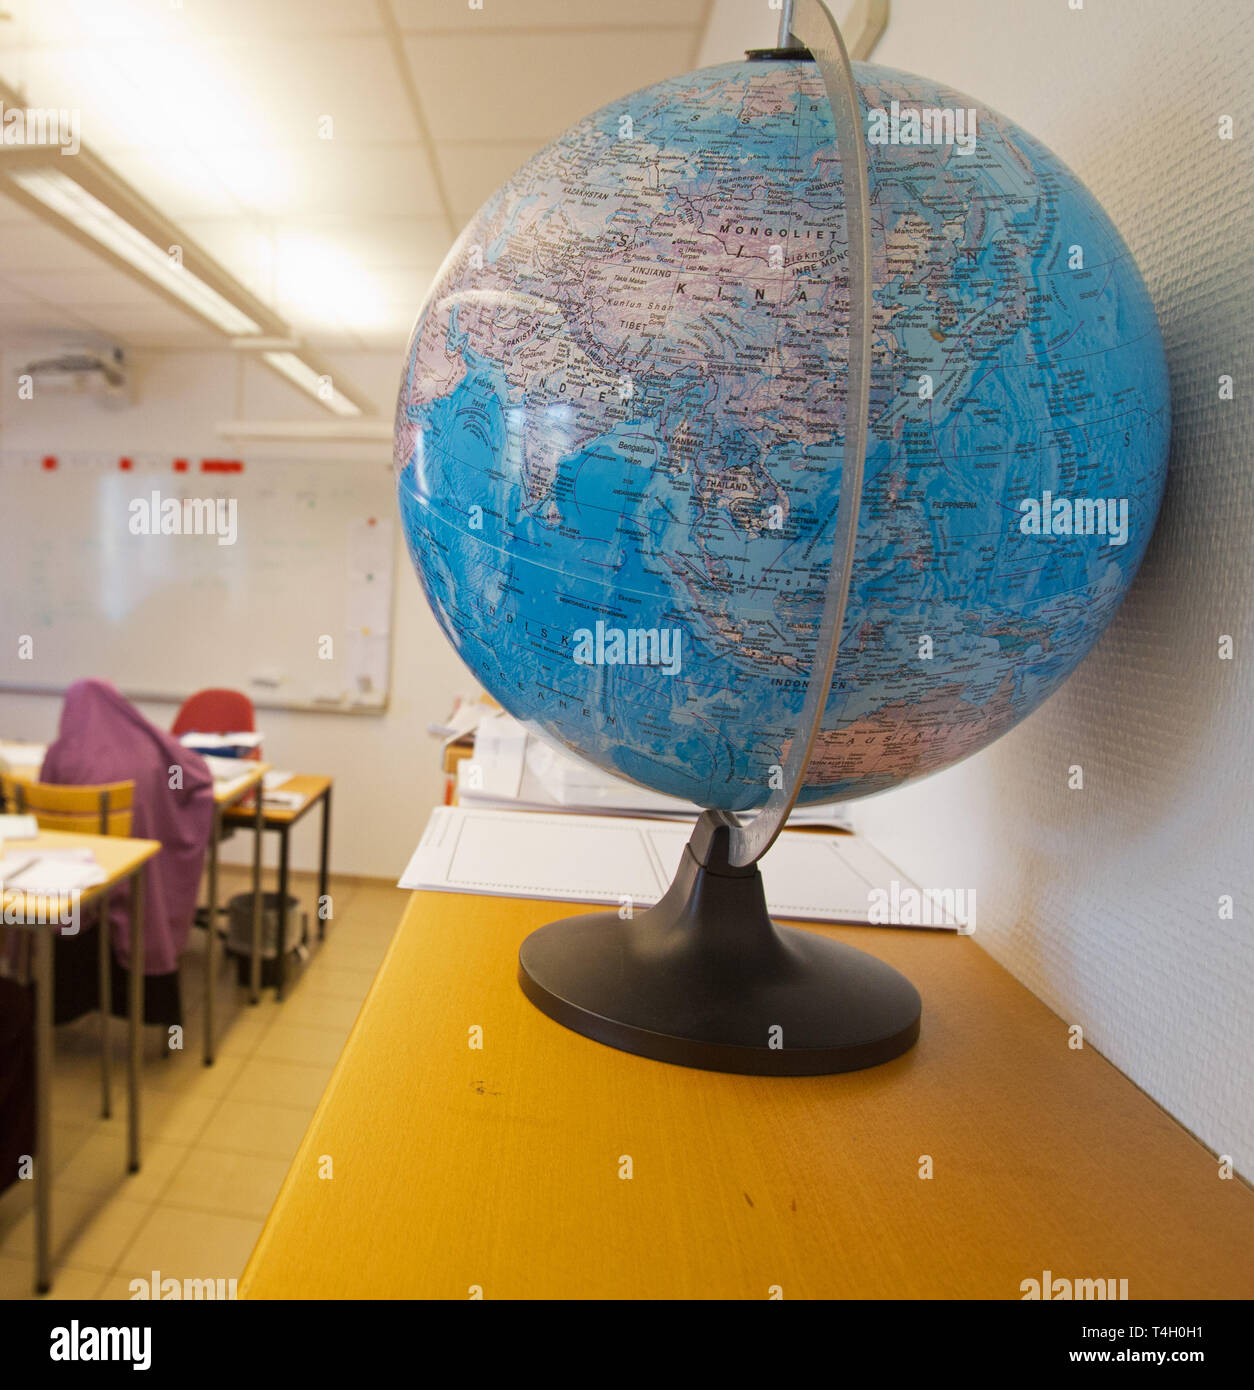 A globe in a classroom. Stock Photo